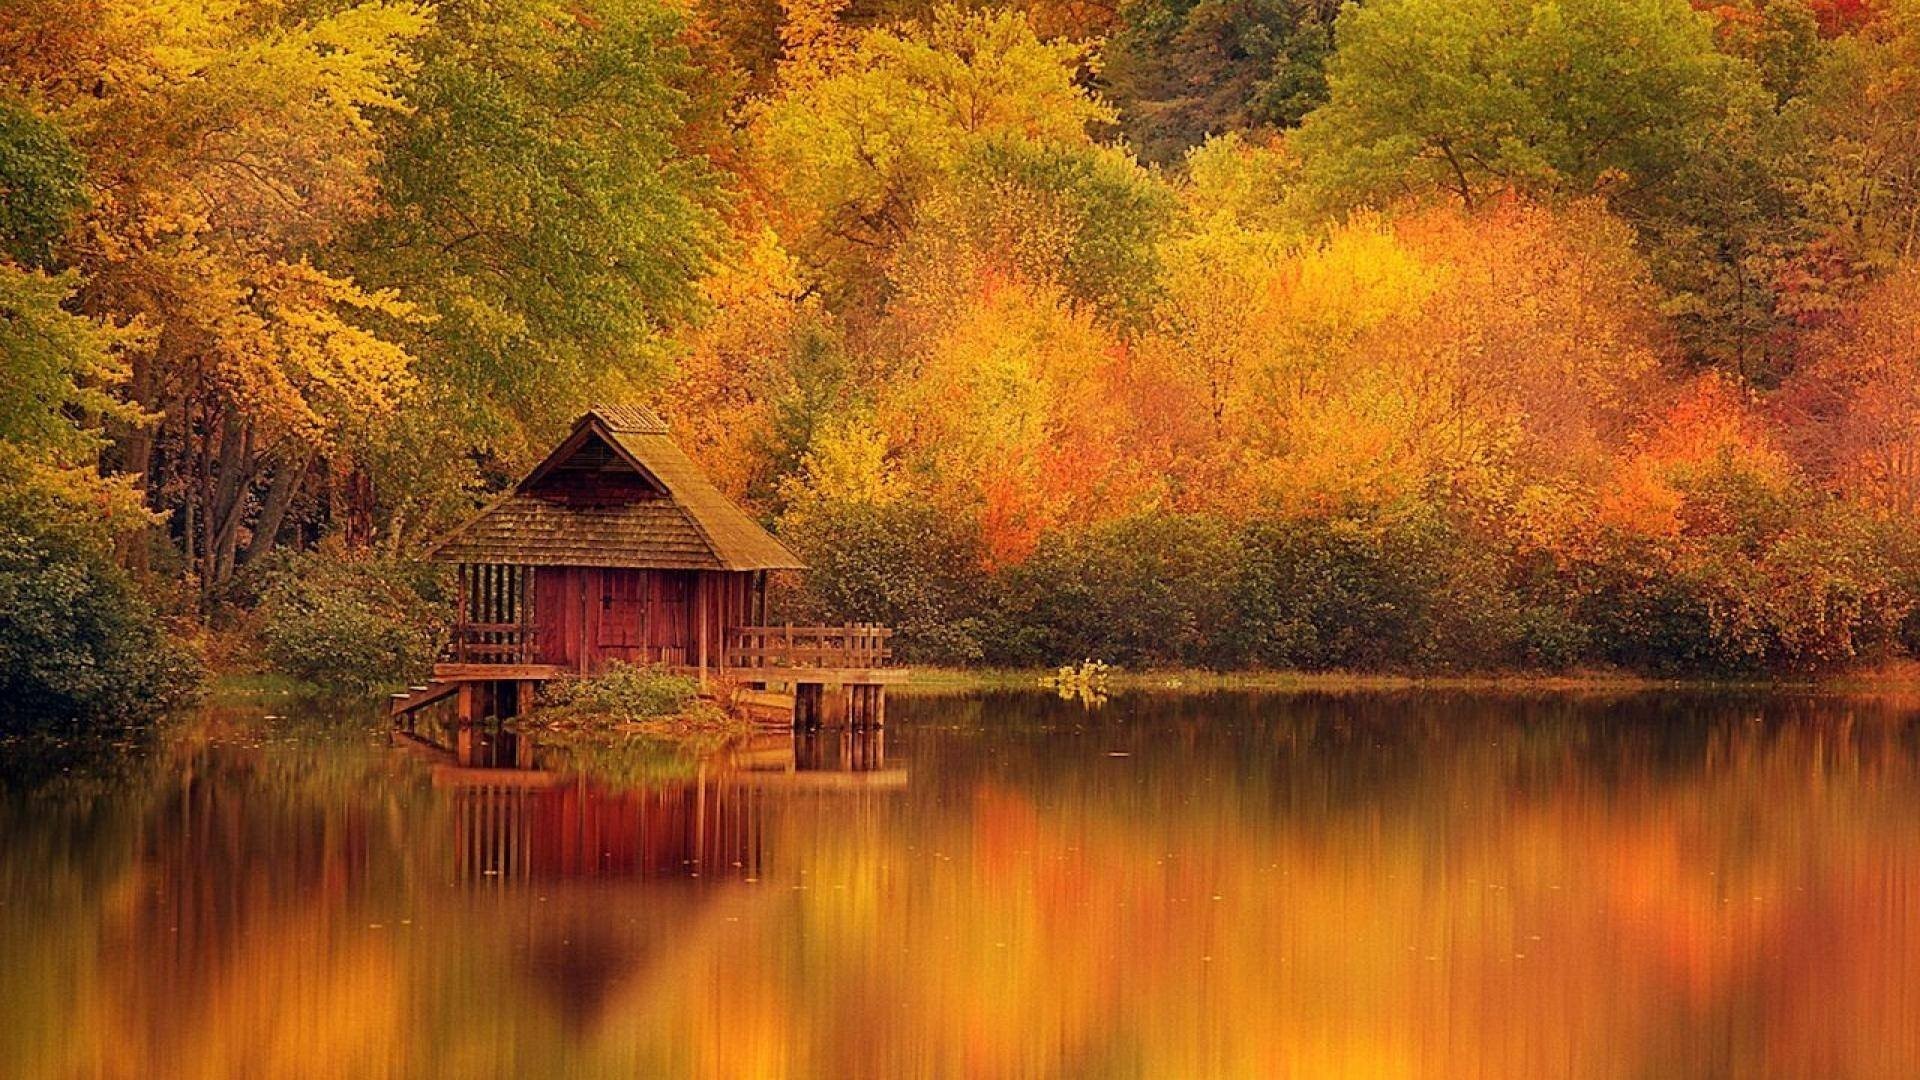 autumn live wallpaper,natural landscape,nature,reflection,painting,leaf